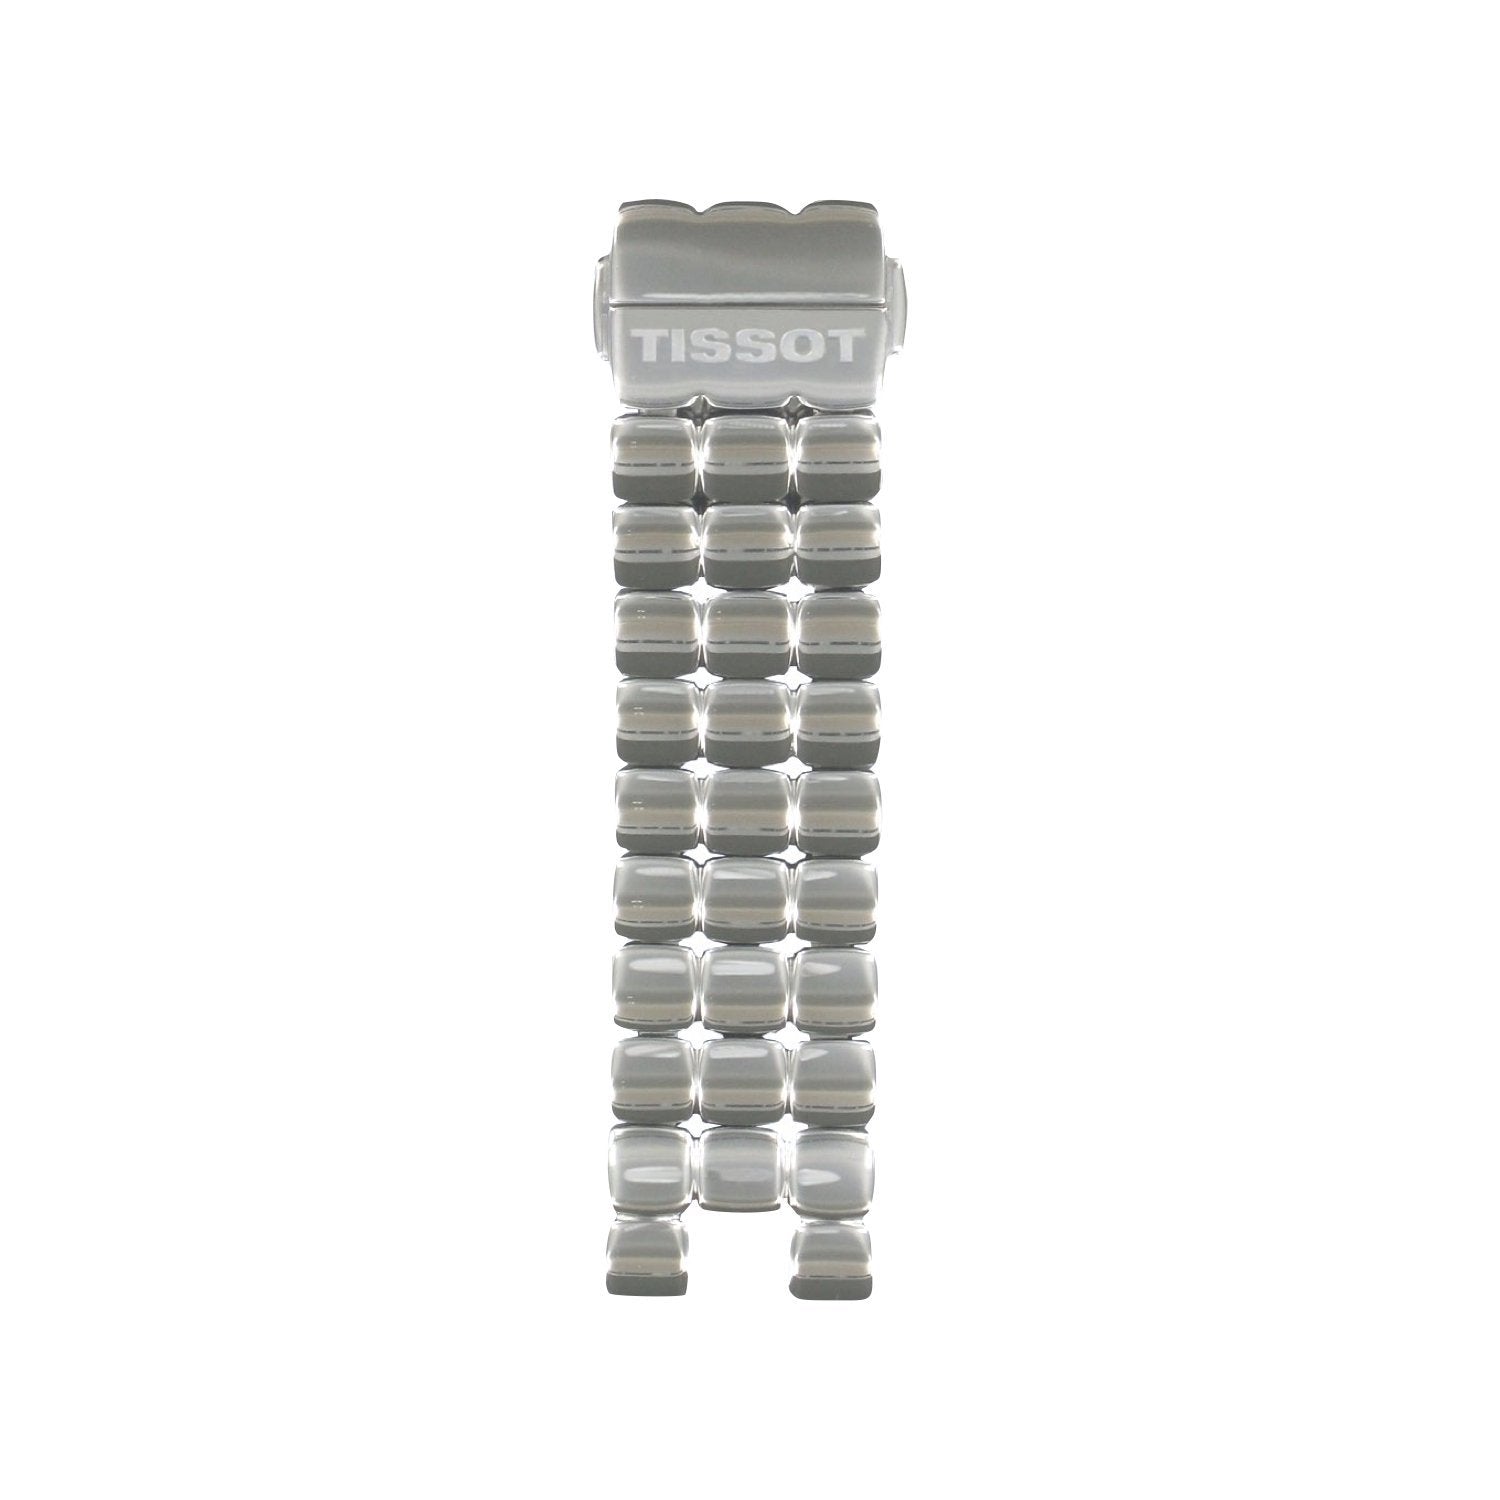 Genuine Tissot 20mm Odaci Stainless steel bracelet by Tissot